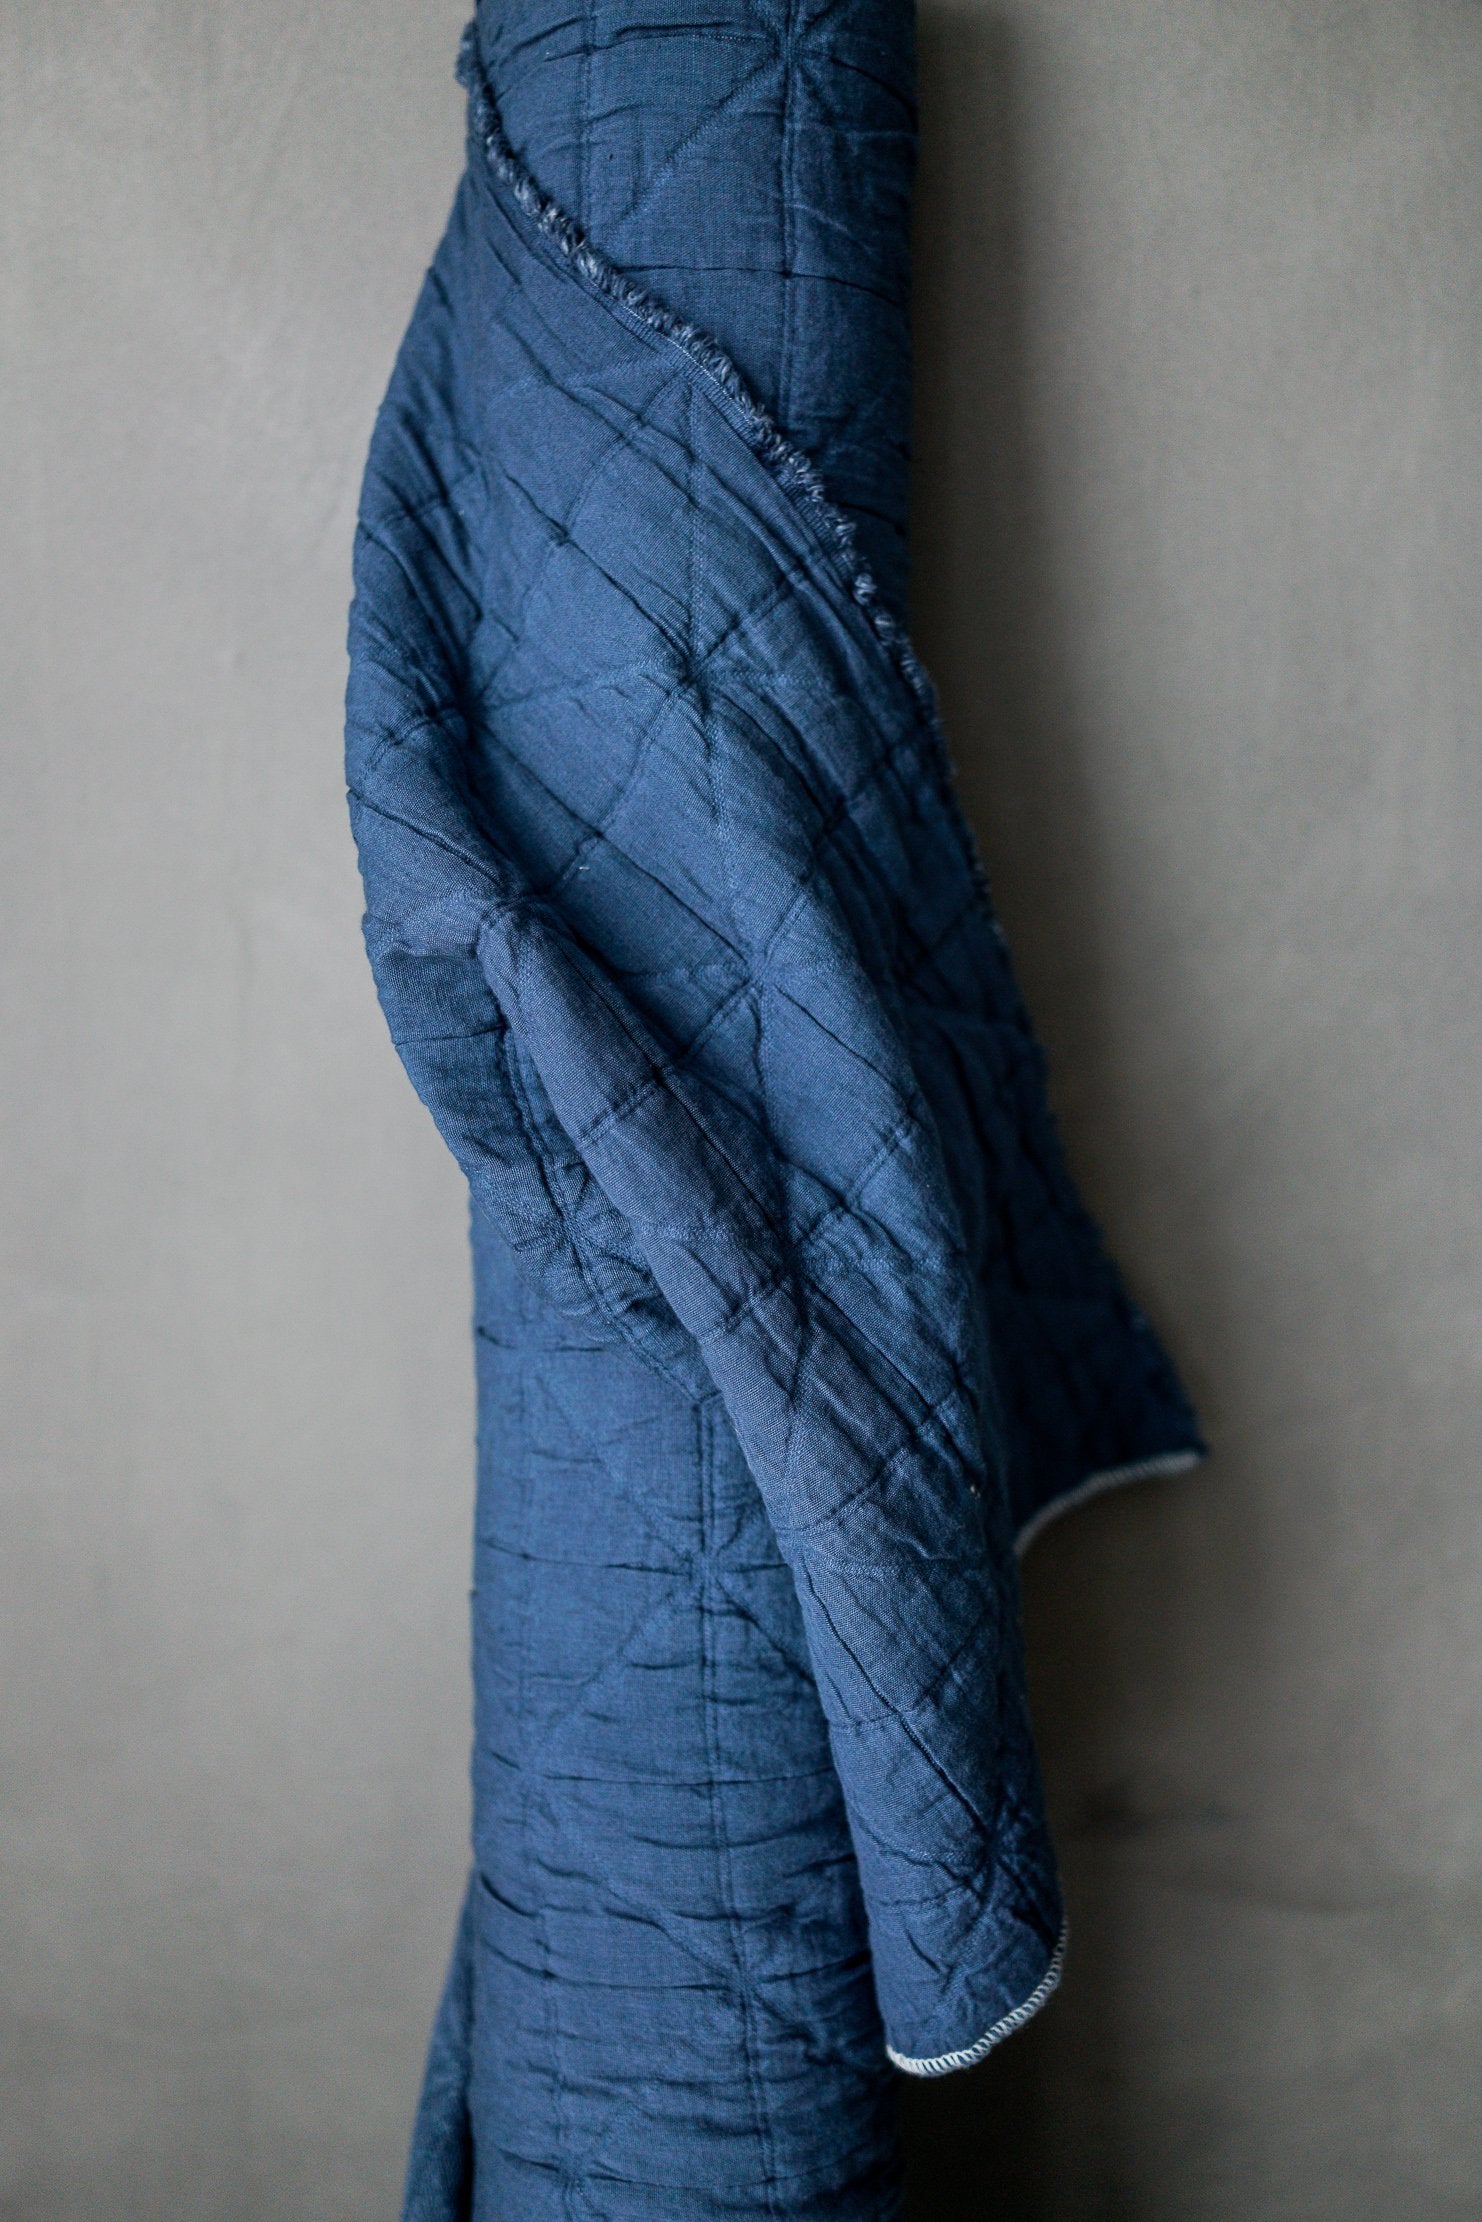 marine blue jacquard fabric in a light grey background